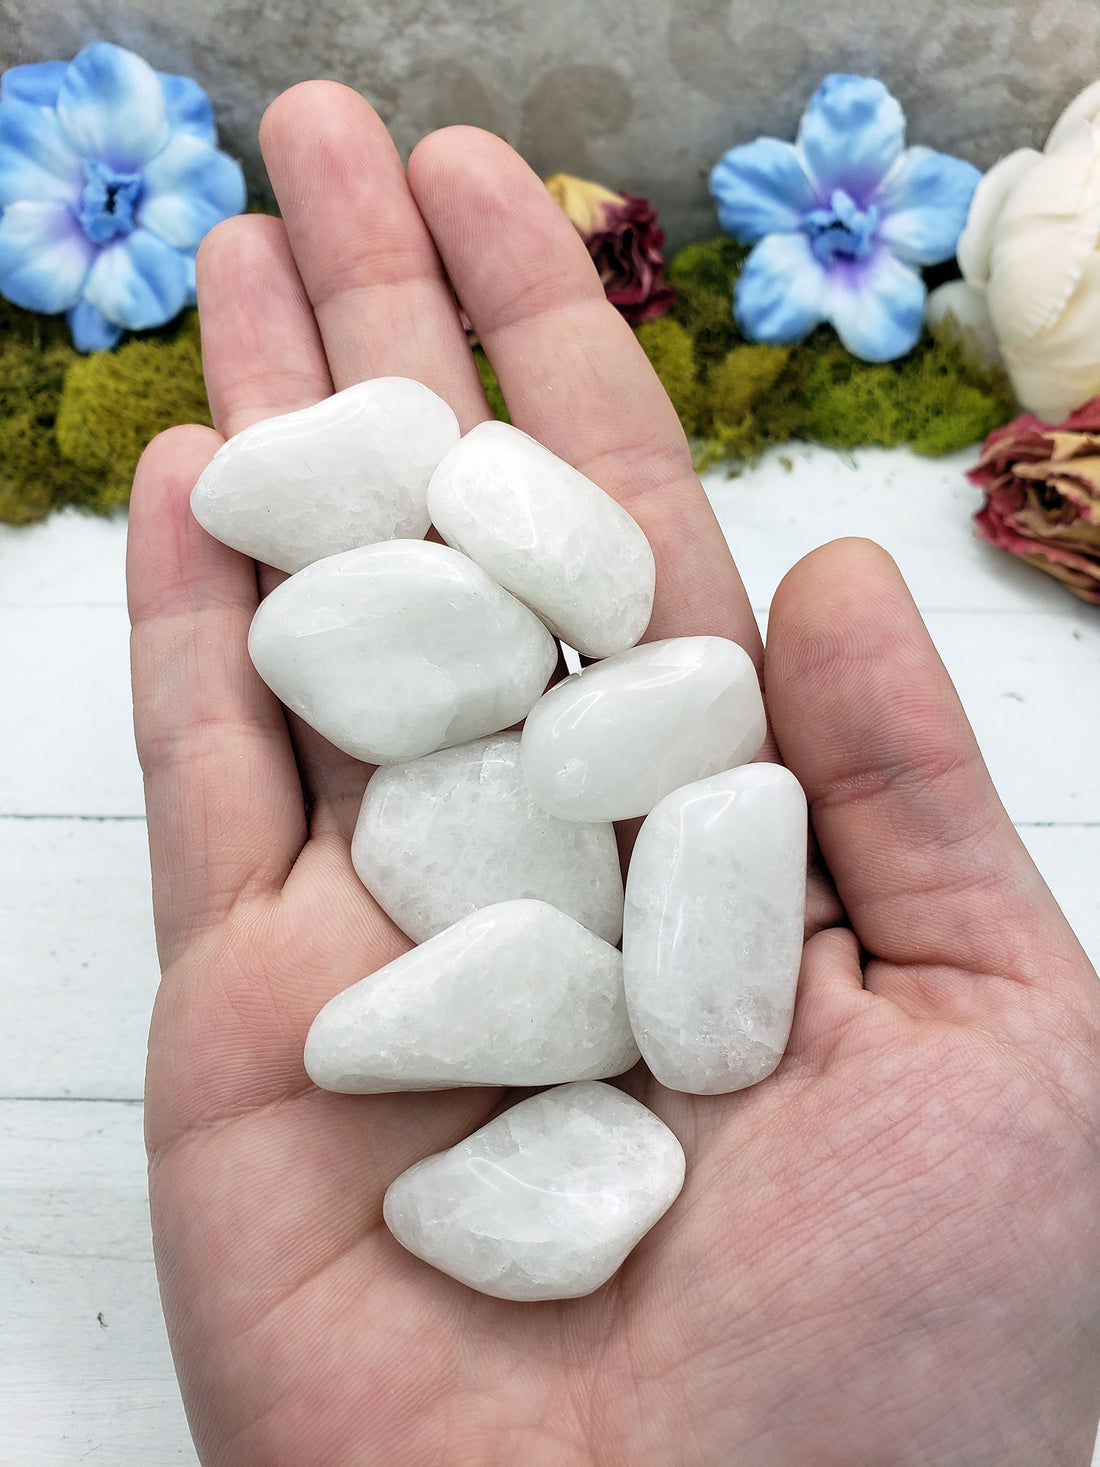 Hand holding Milky quartz stone specimens